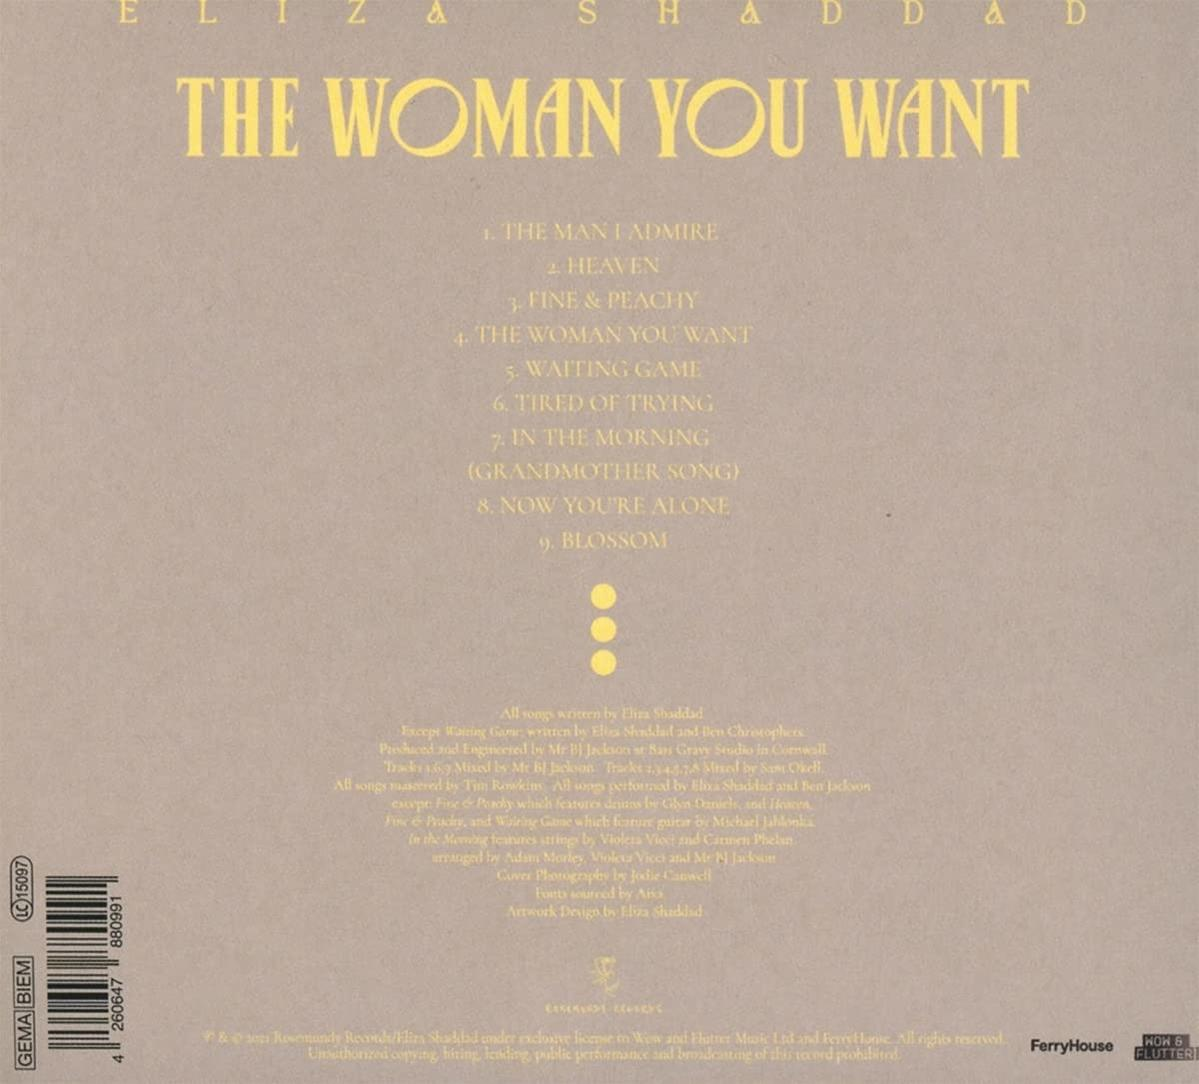 - You Want (CD) Shaddad The Eliza - Woman